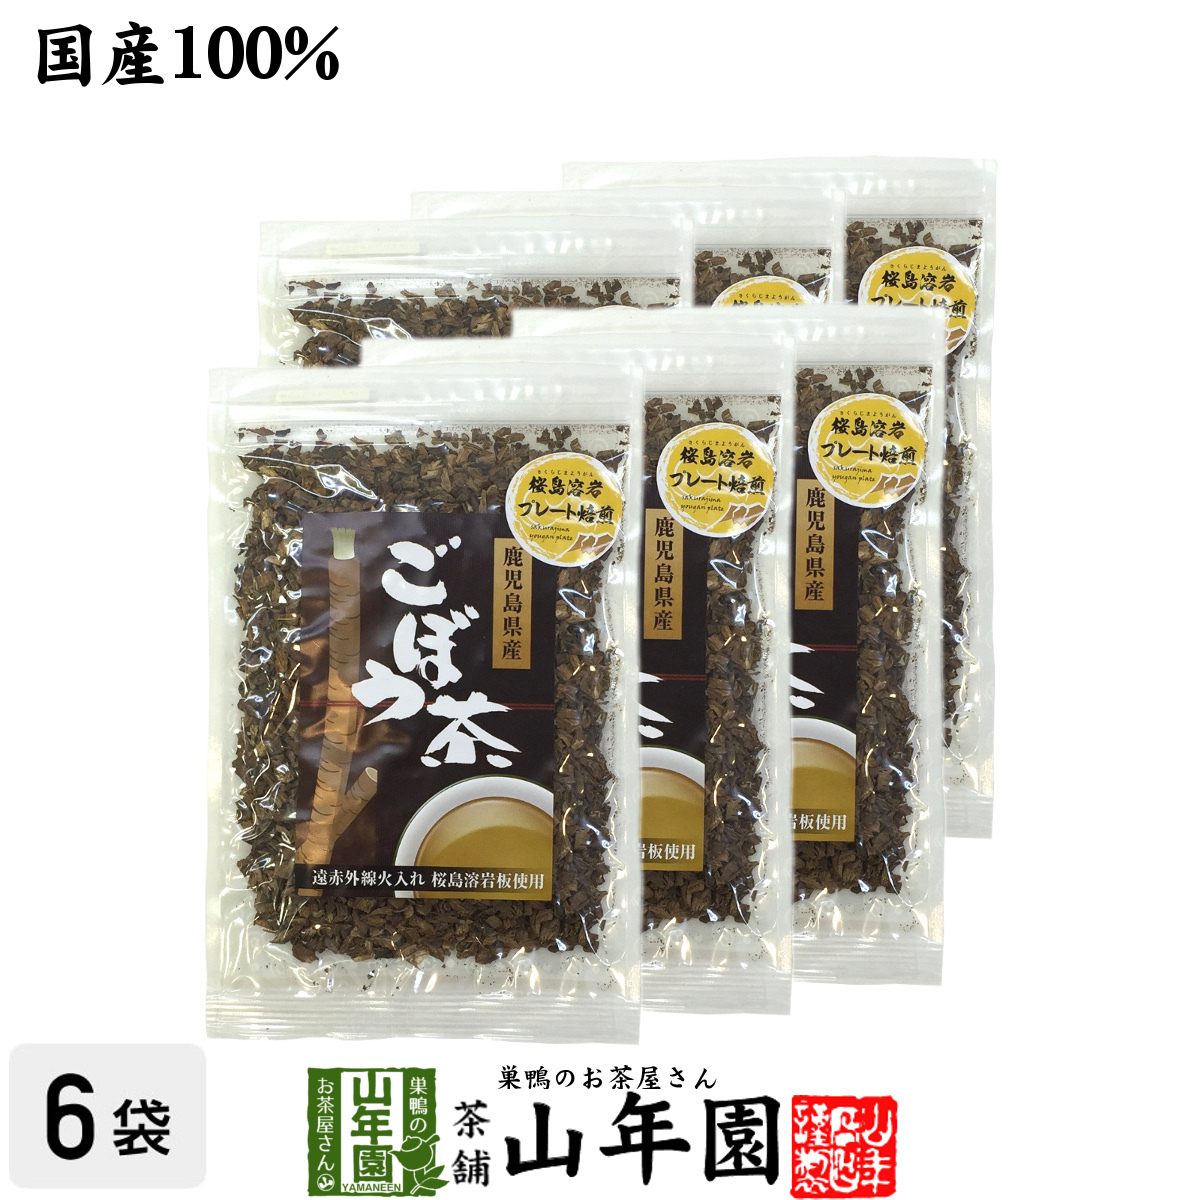  health tea gobou tea domestic production 70g×6 sack set Miyazaki prefecture production meal .... gobou tea free shipping 